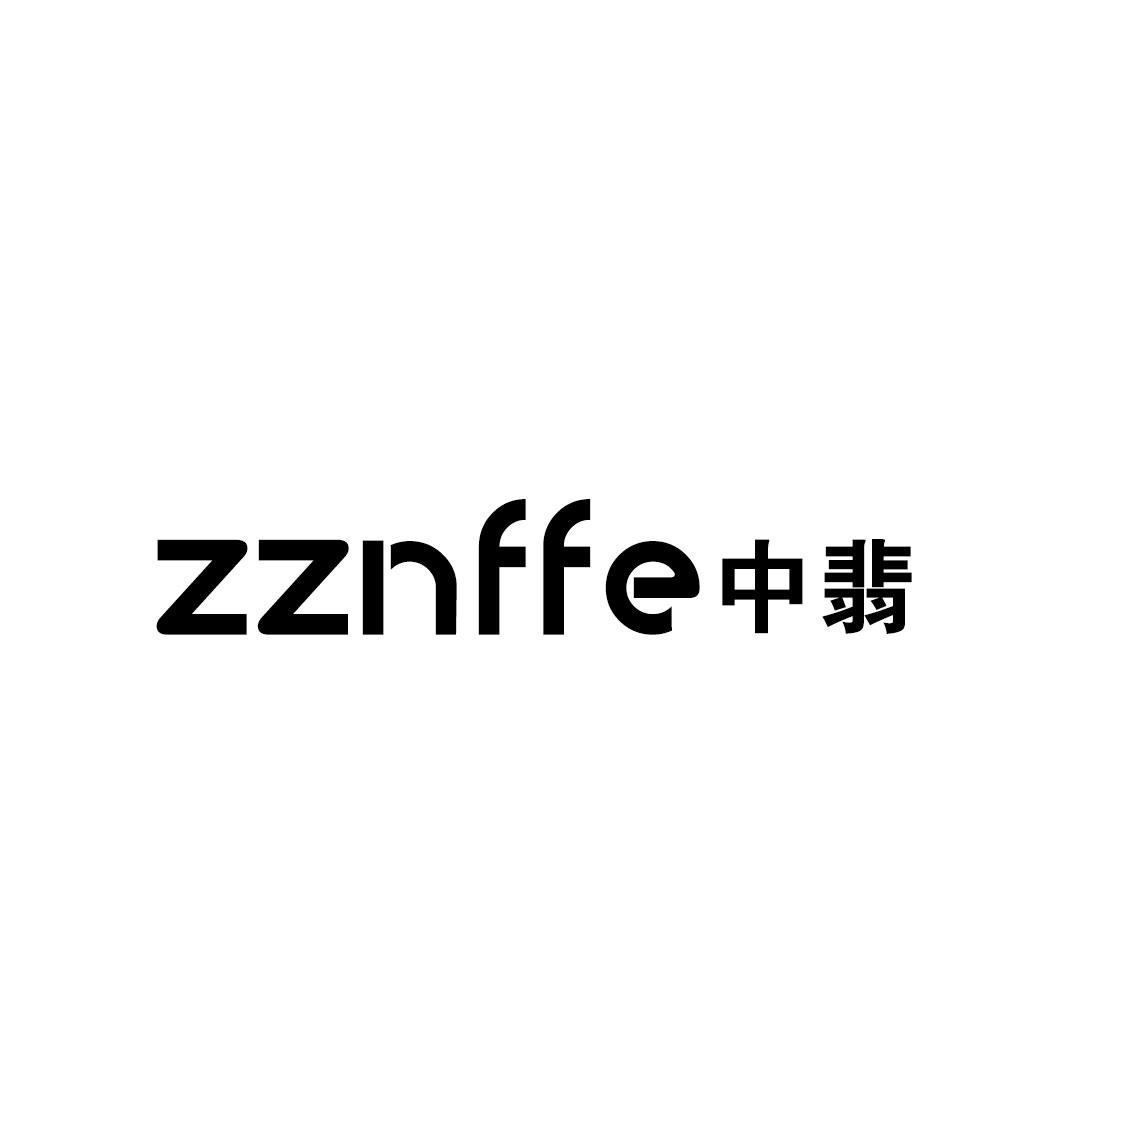 11类-电器灯具ZZNFFE 中翡商标转让